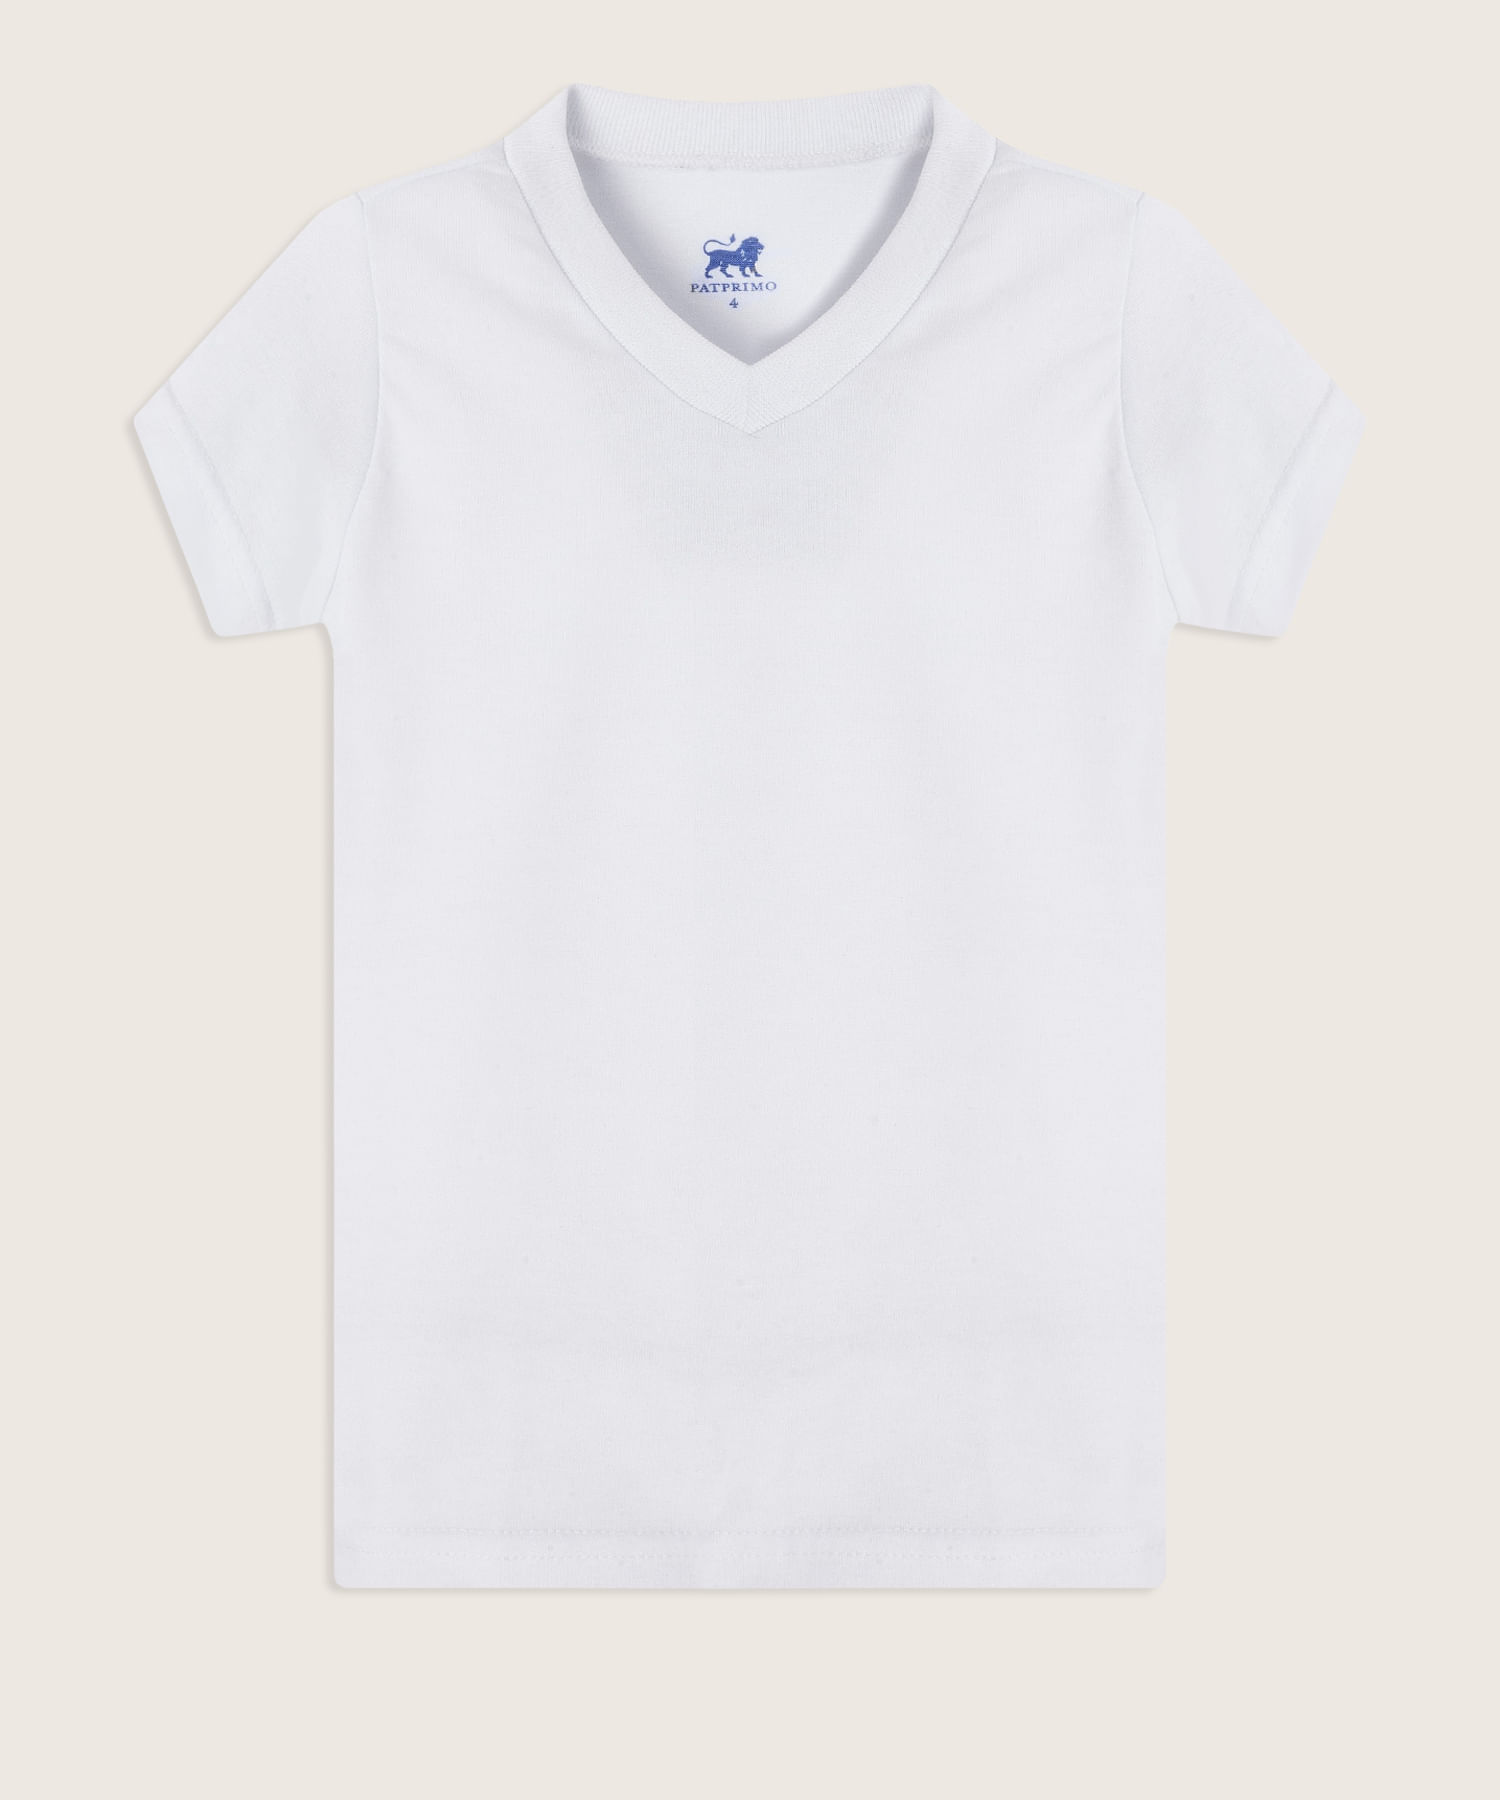 Camiseta Blanca Lisa - Patprimo